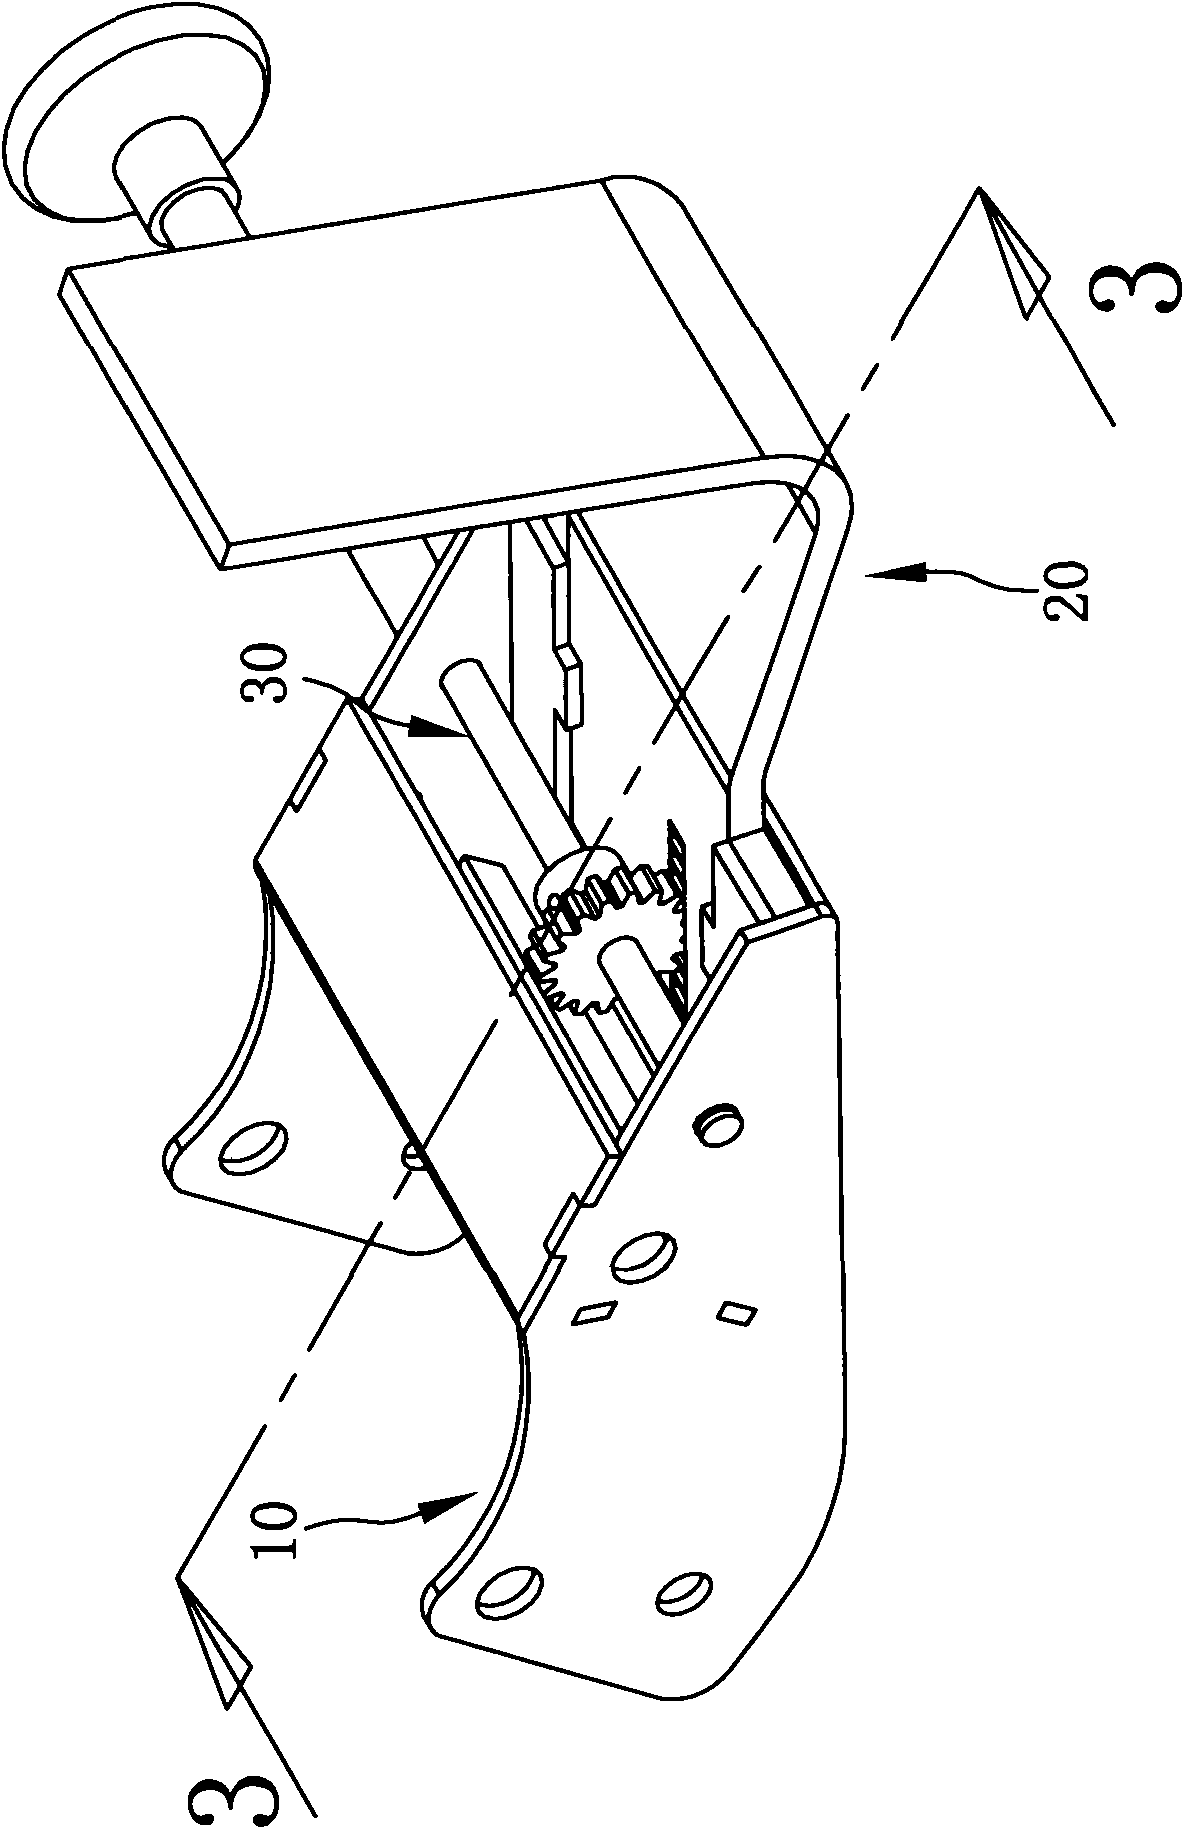 Chair-back adjusting device